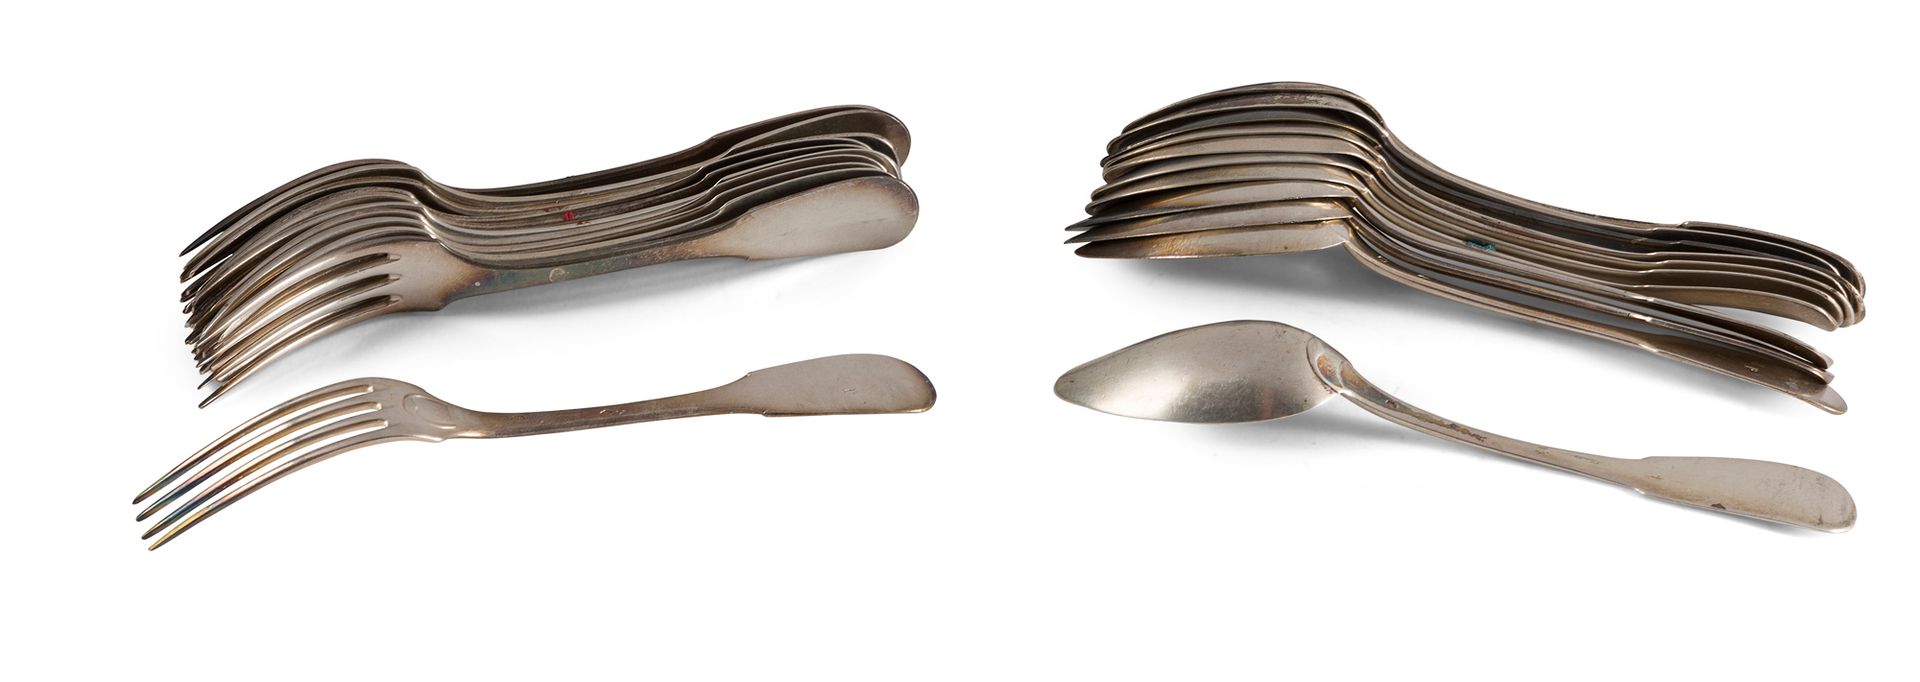 Null 七个银质勺子和七个叉子（Minerve第1个标题），普通的平面图案。

包括四套镀银餐具，普通图案。

Pds 1 120 g